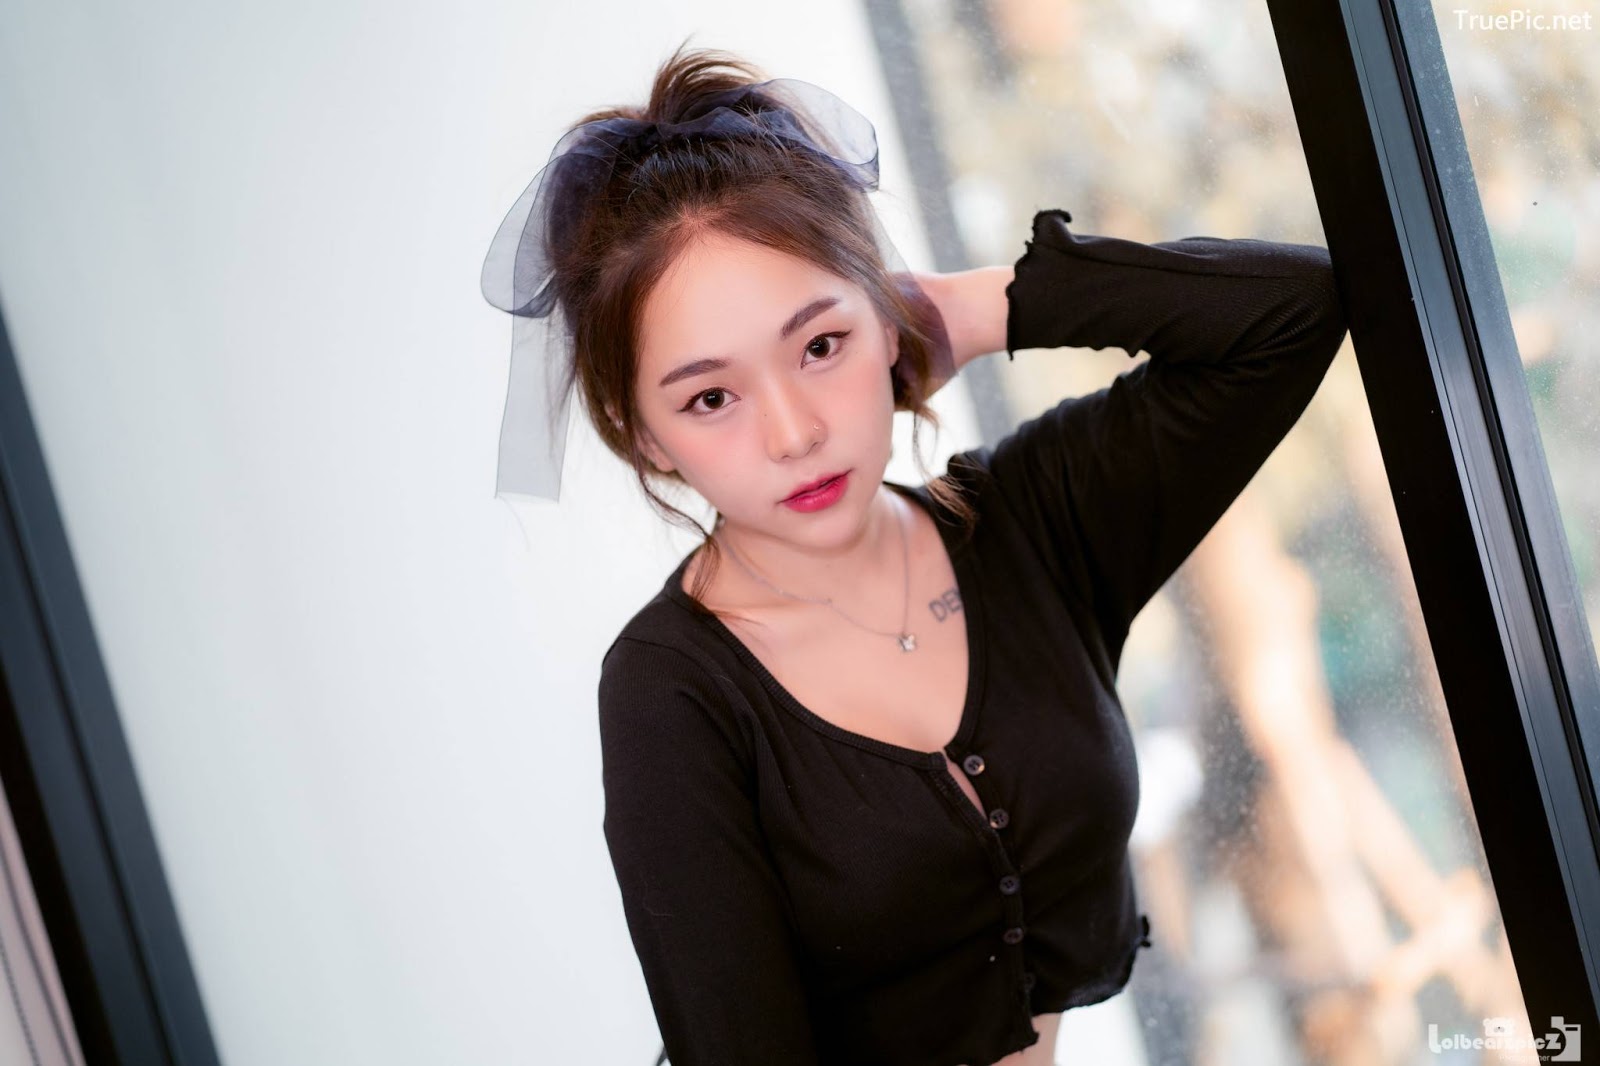 Image Thailand Model - Sunna Dewa - Cute Naughty Girl - TruePic.net - Picture-26